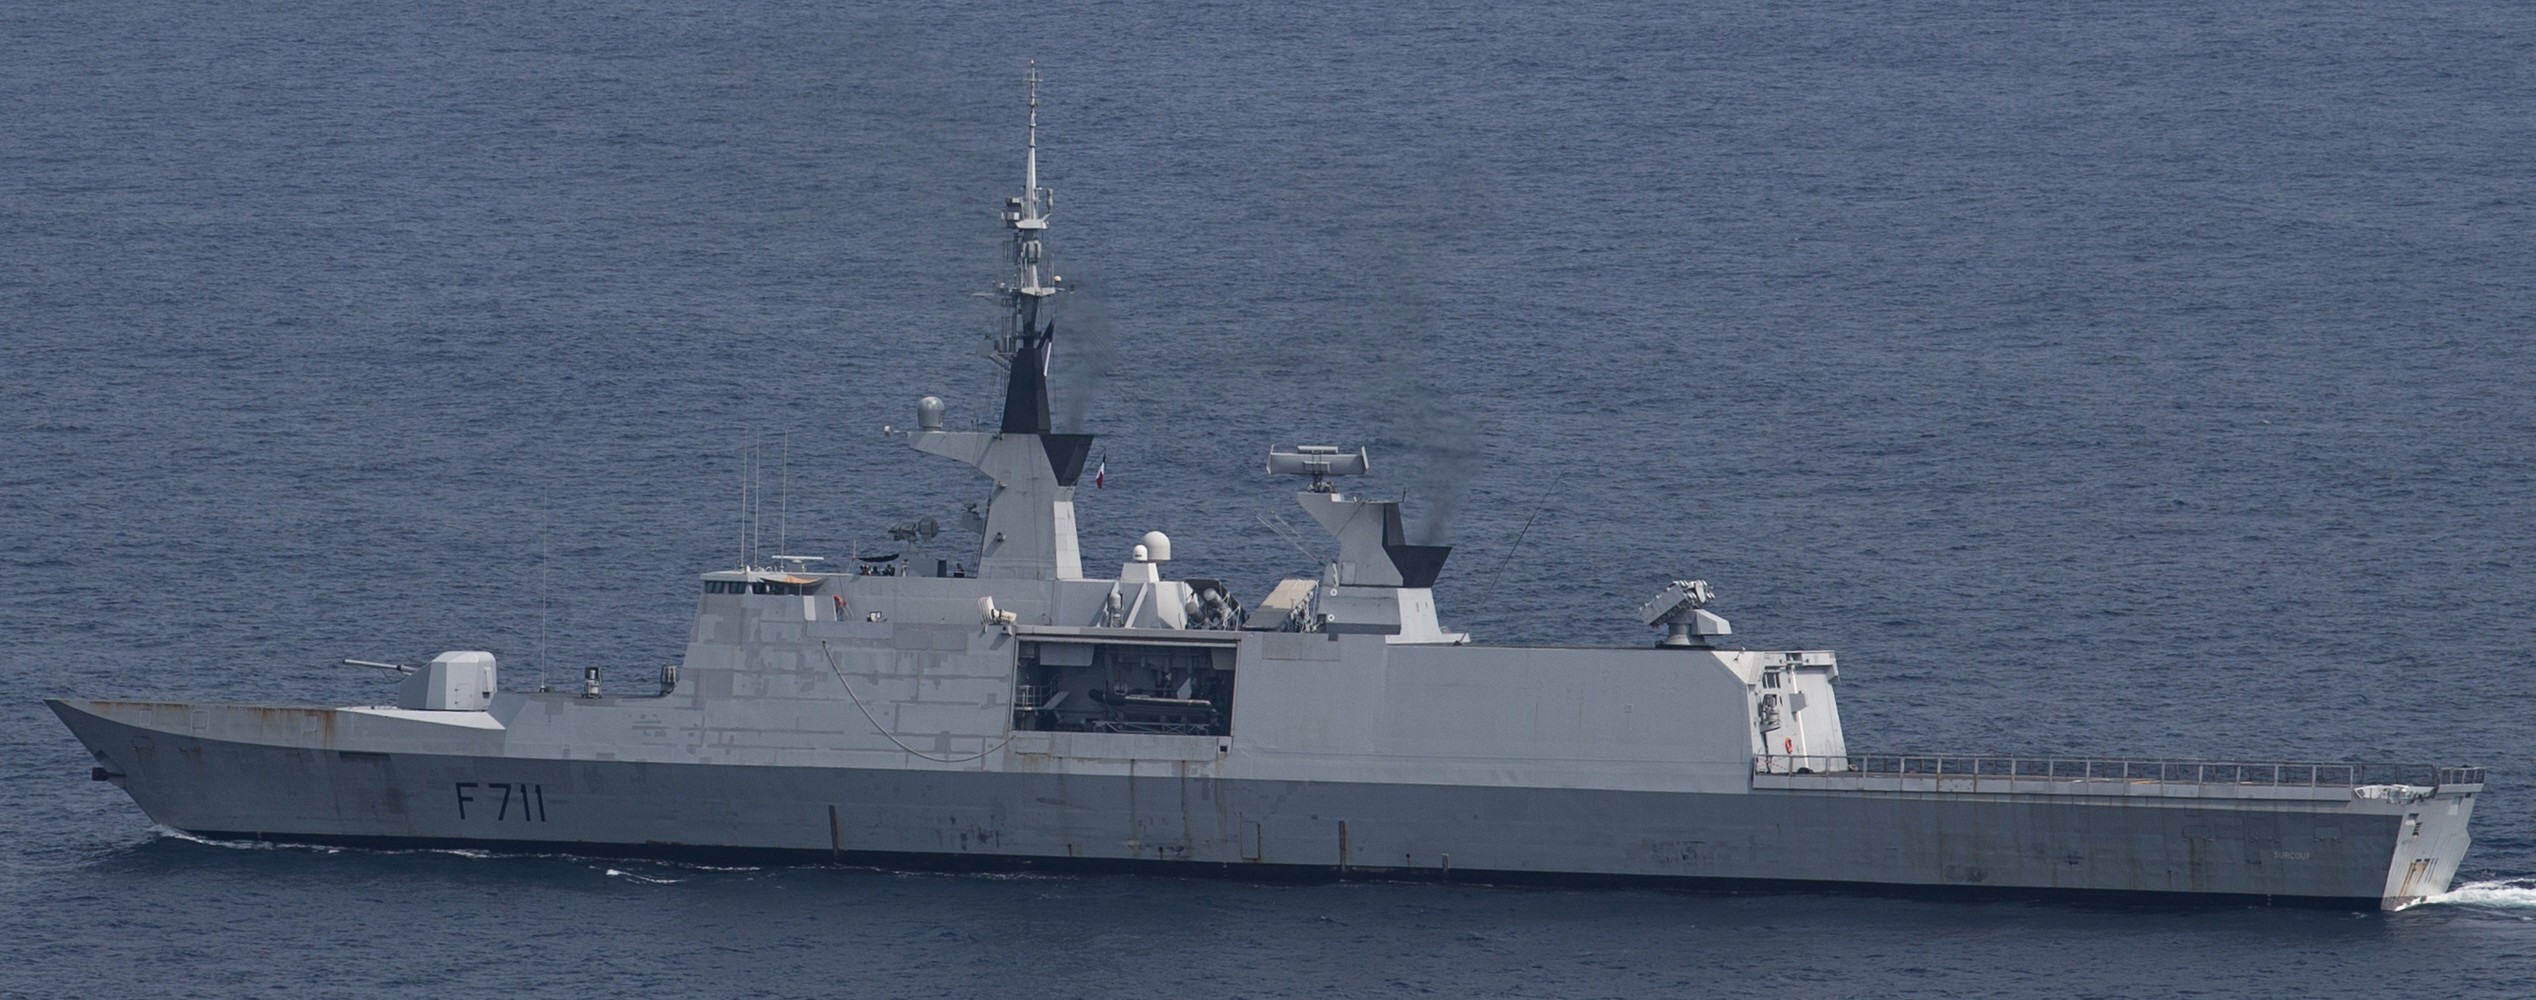 f-711 fs surcouf la fayette class frigate french navy marine nationale 15